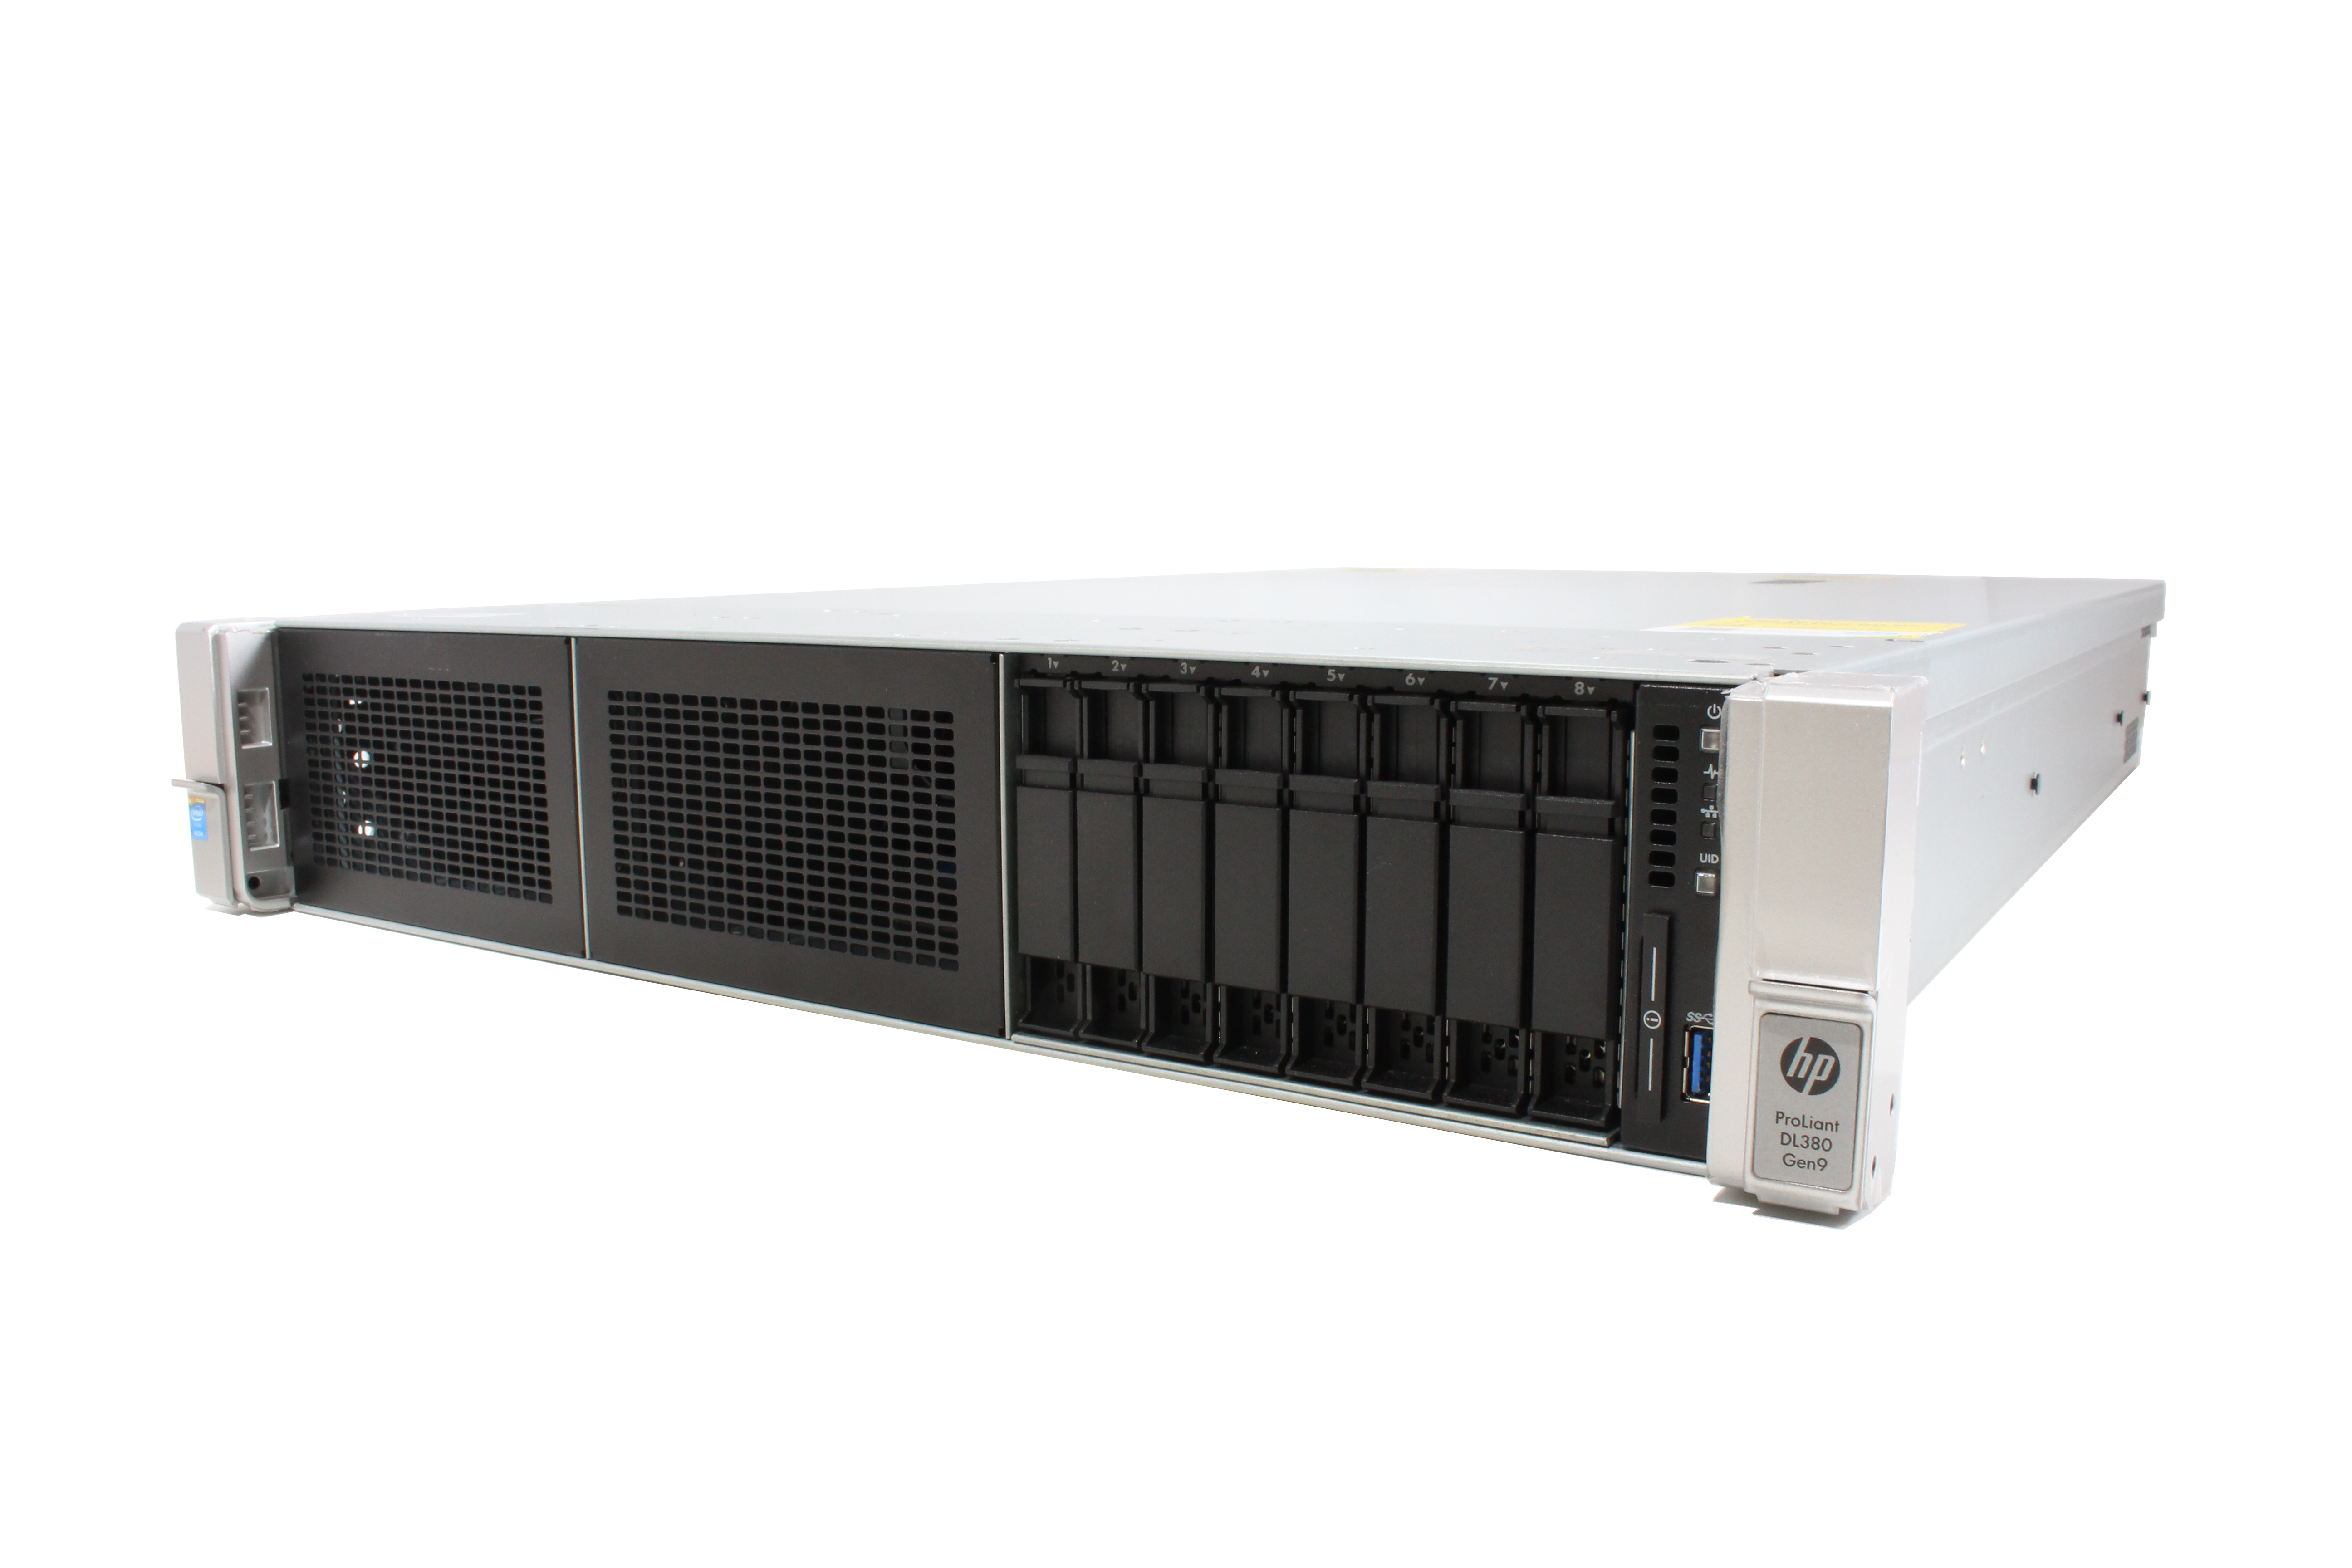 DL380 Gen9 Rack Server